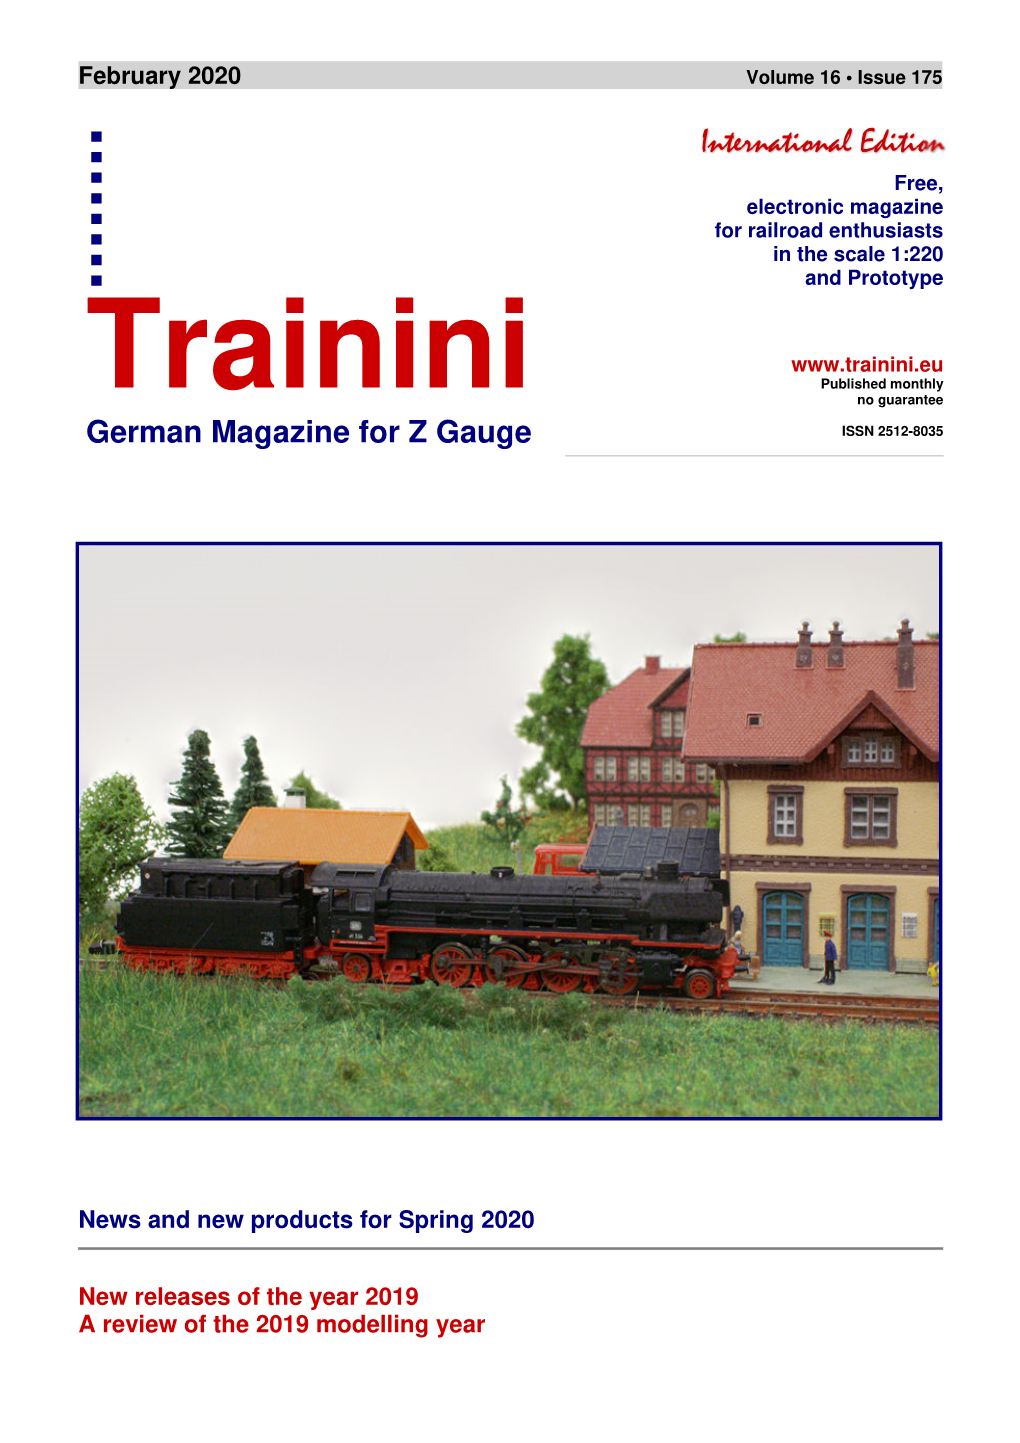 Trainini Magazine: February 2020 | International Edition